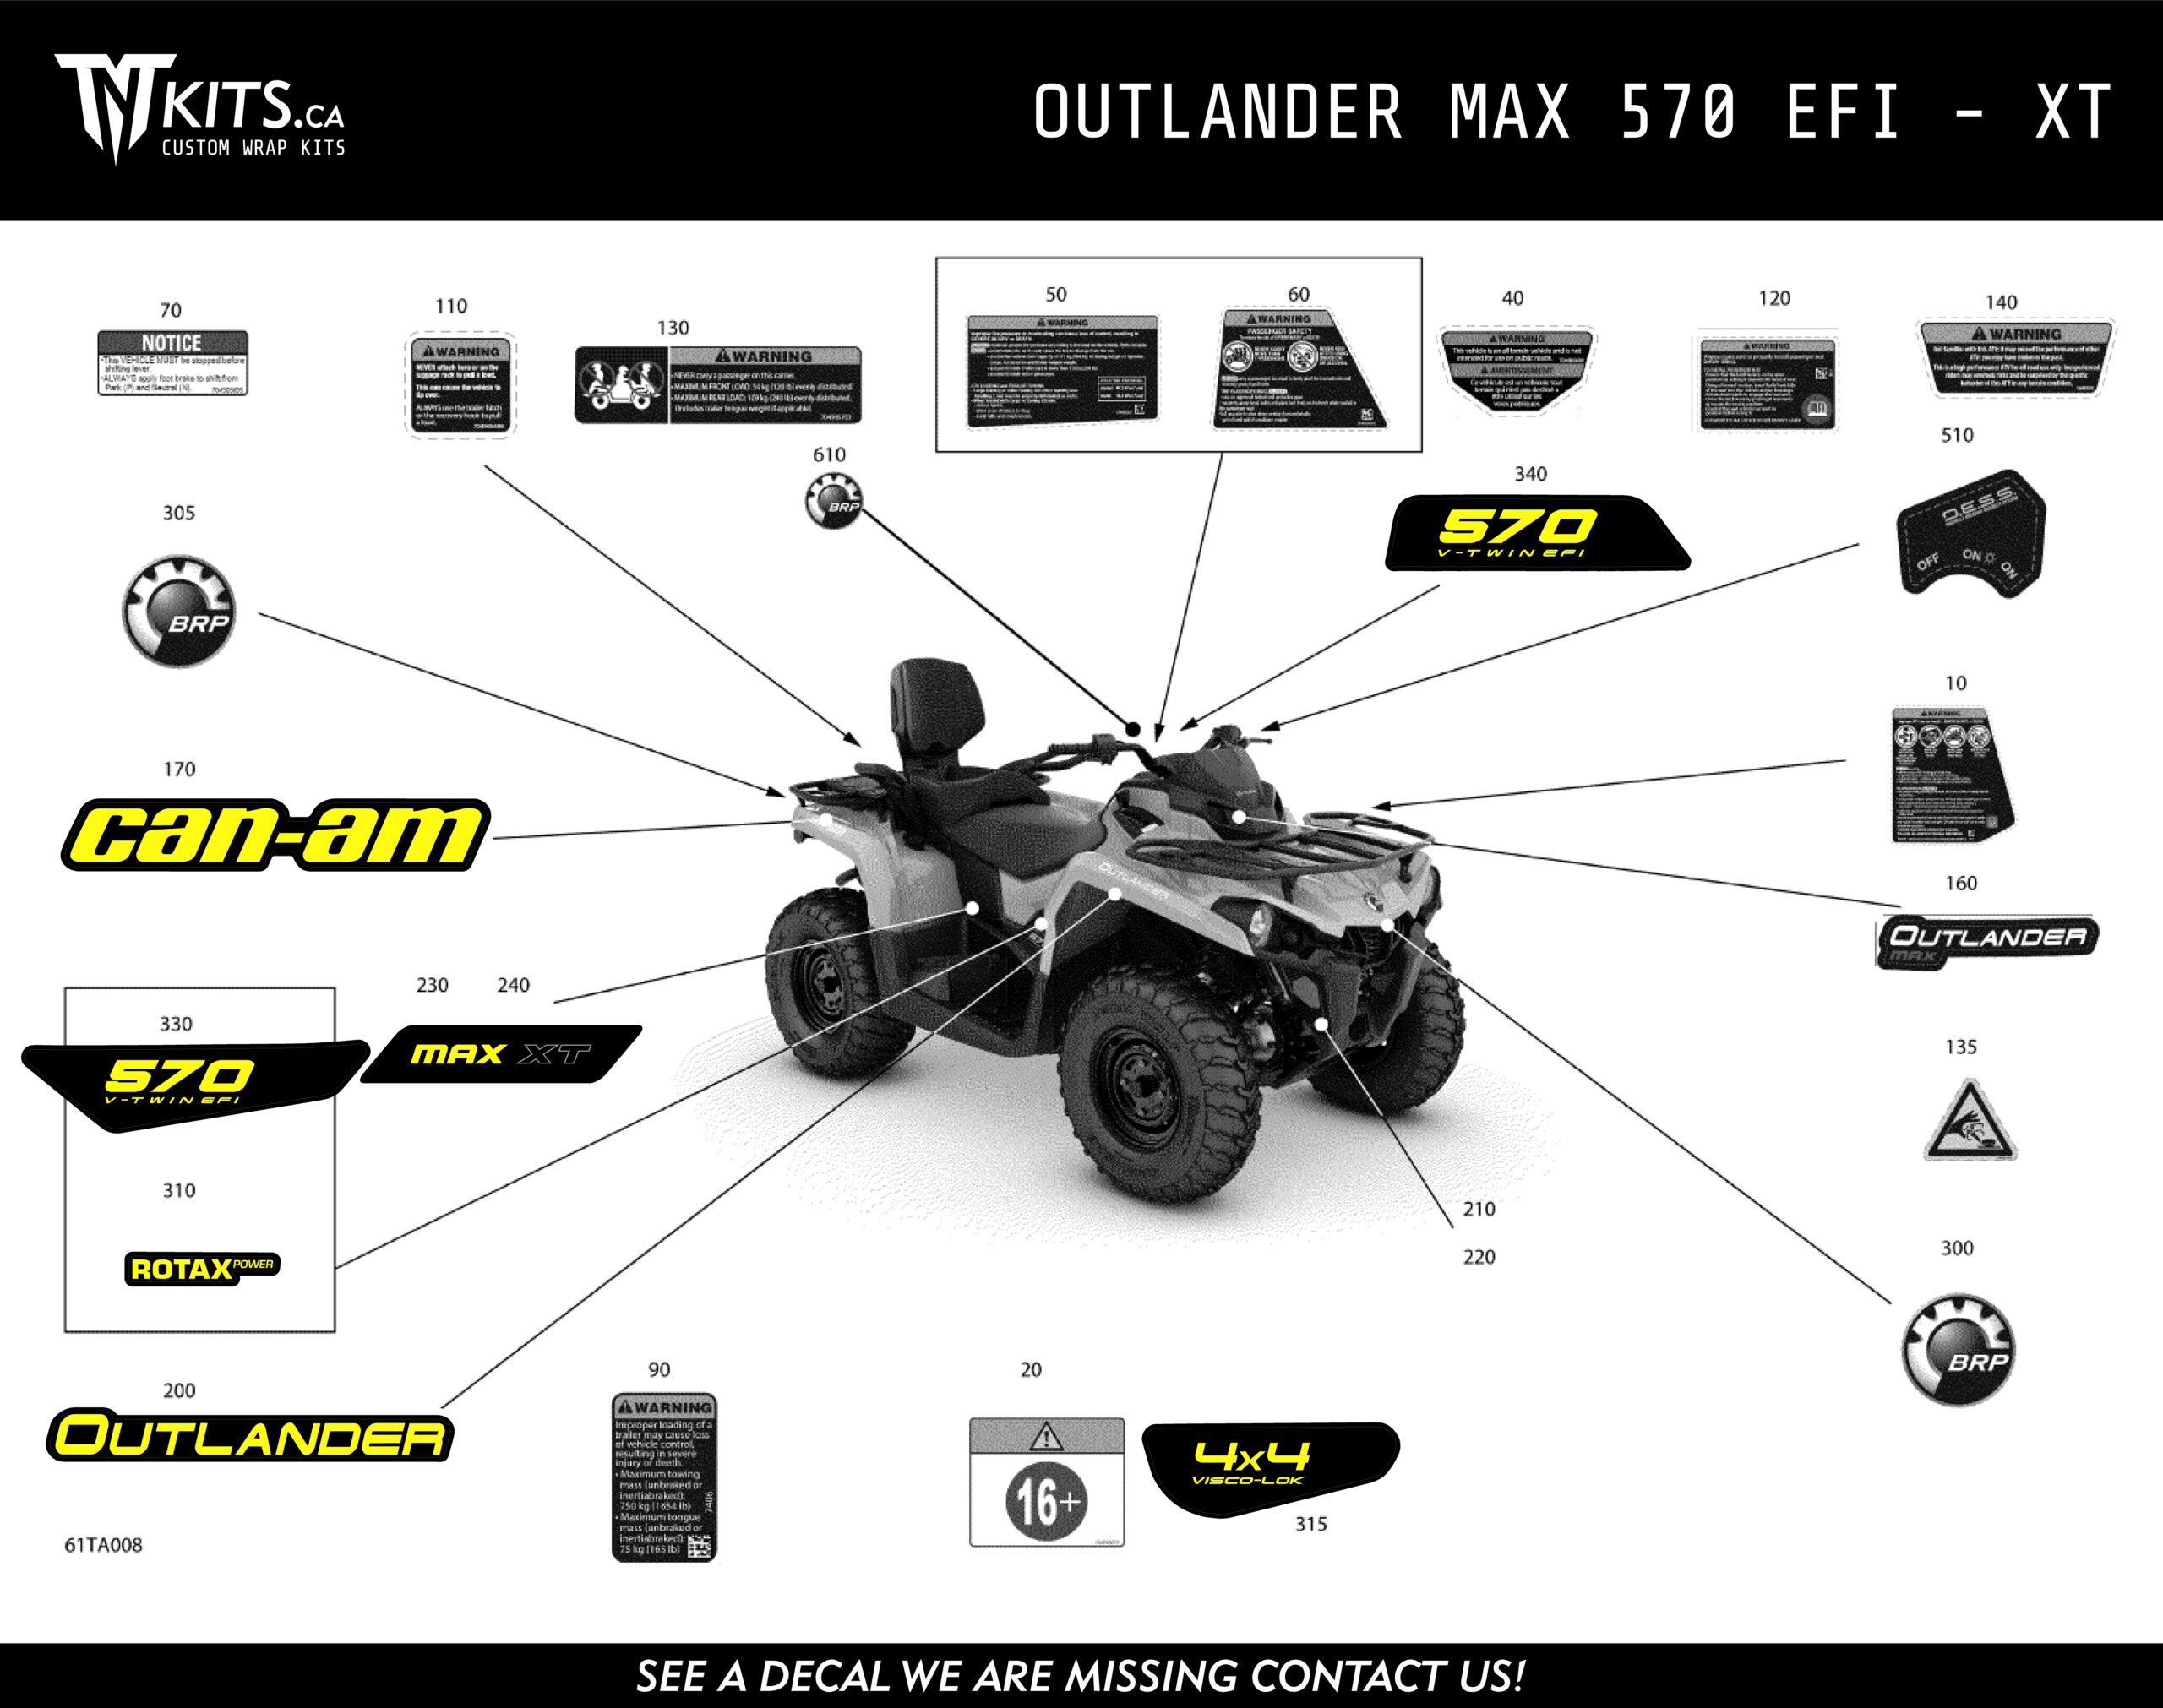 OUTLANDER MAX 570 EFI - XT